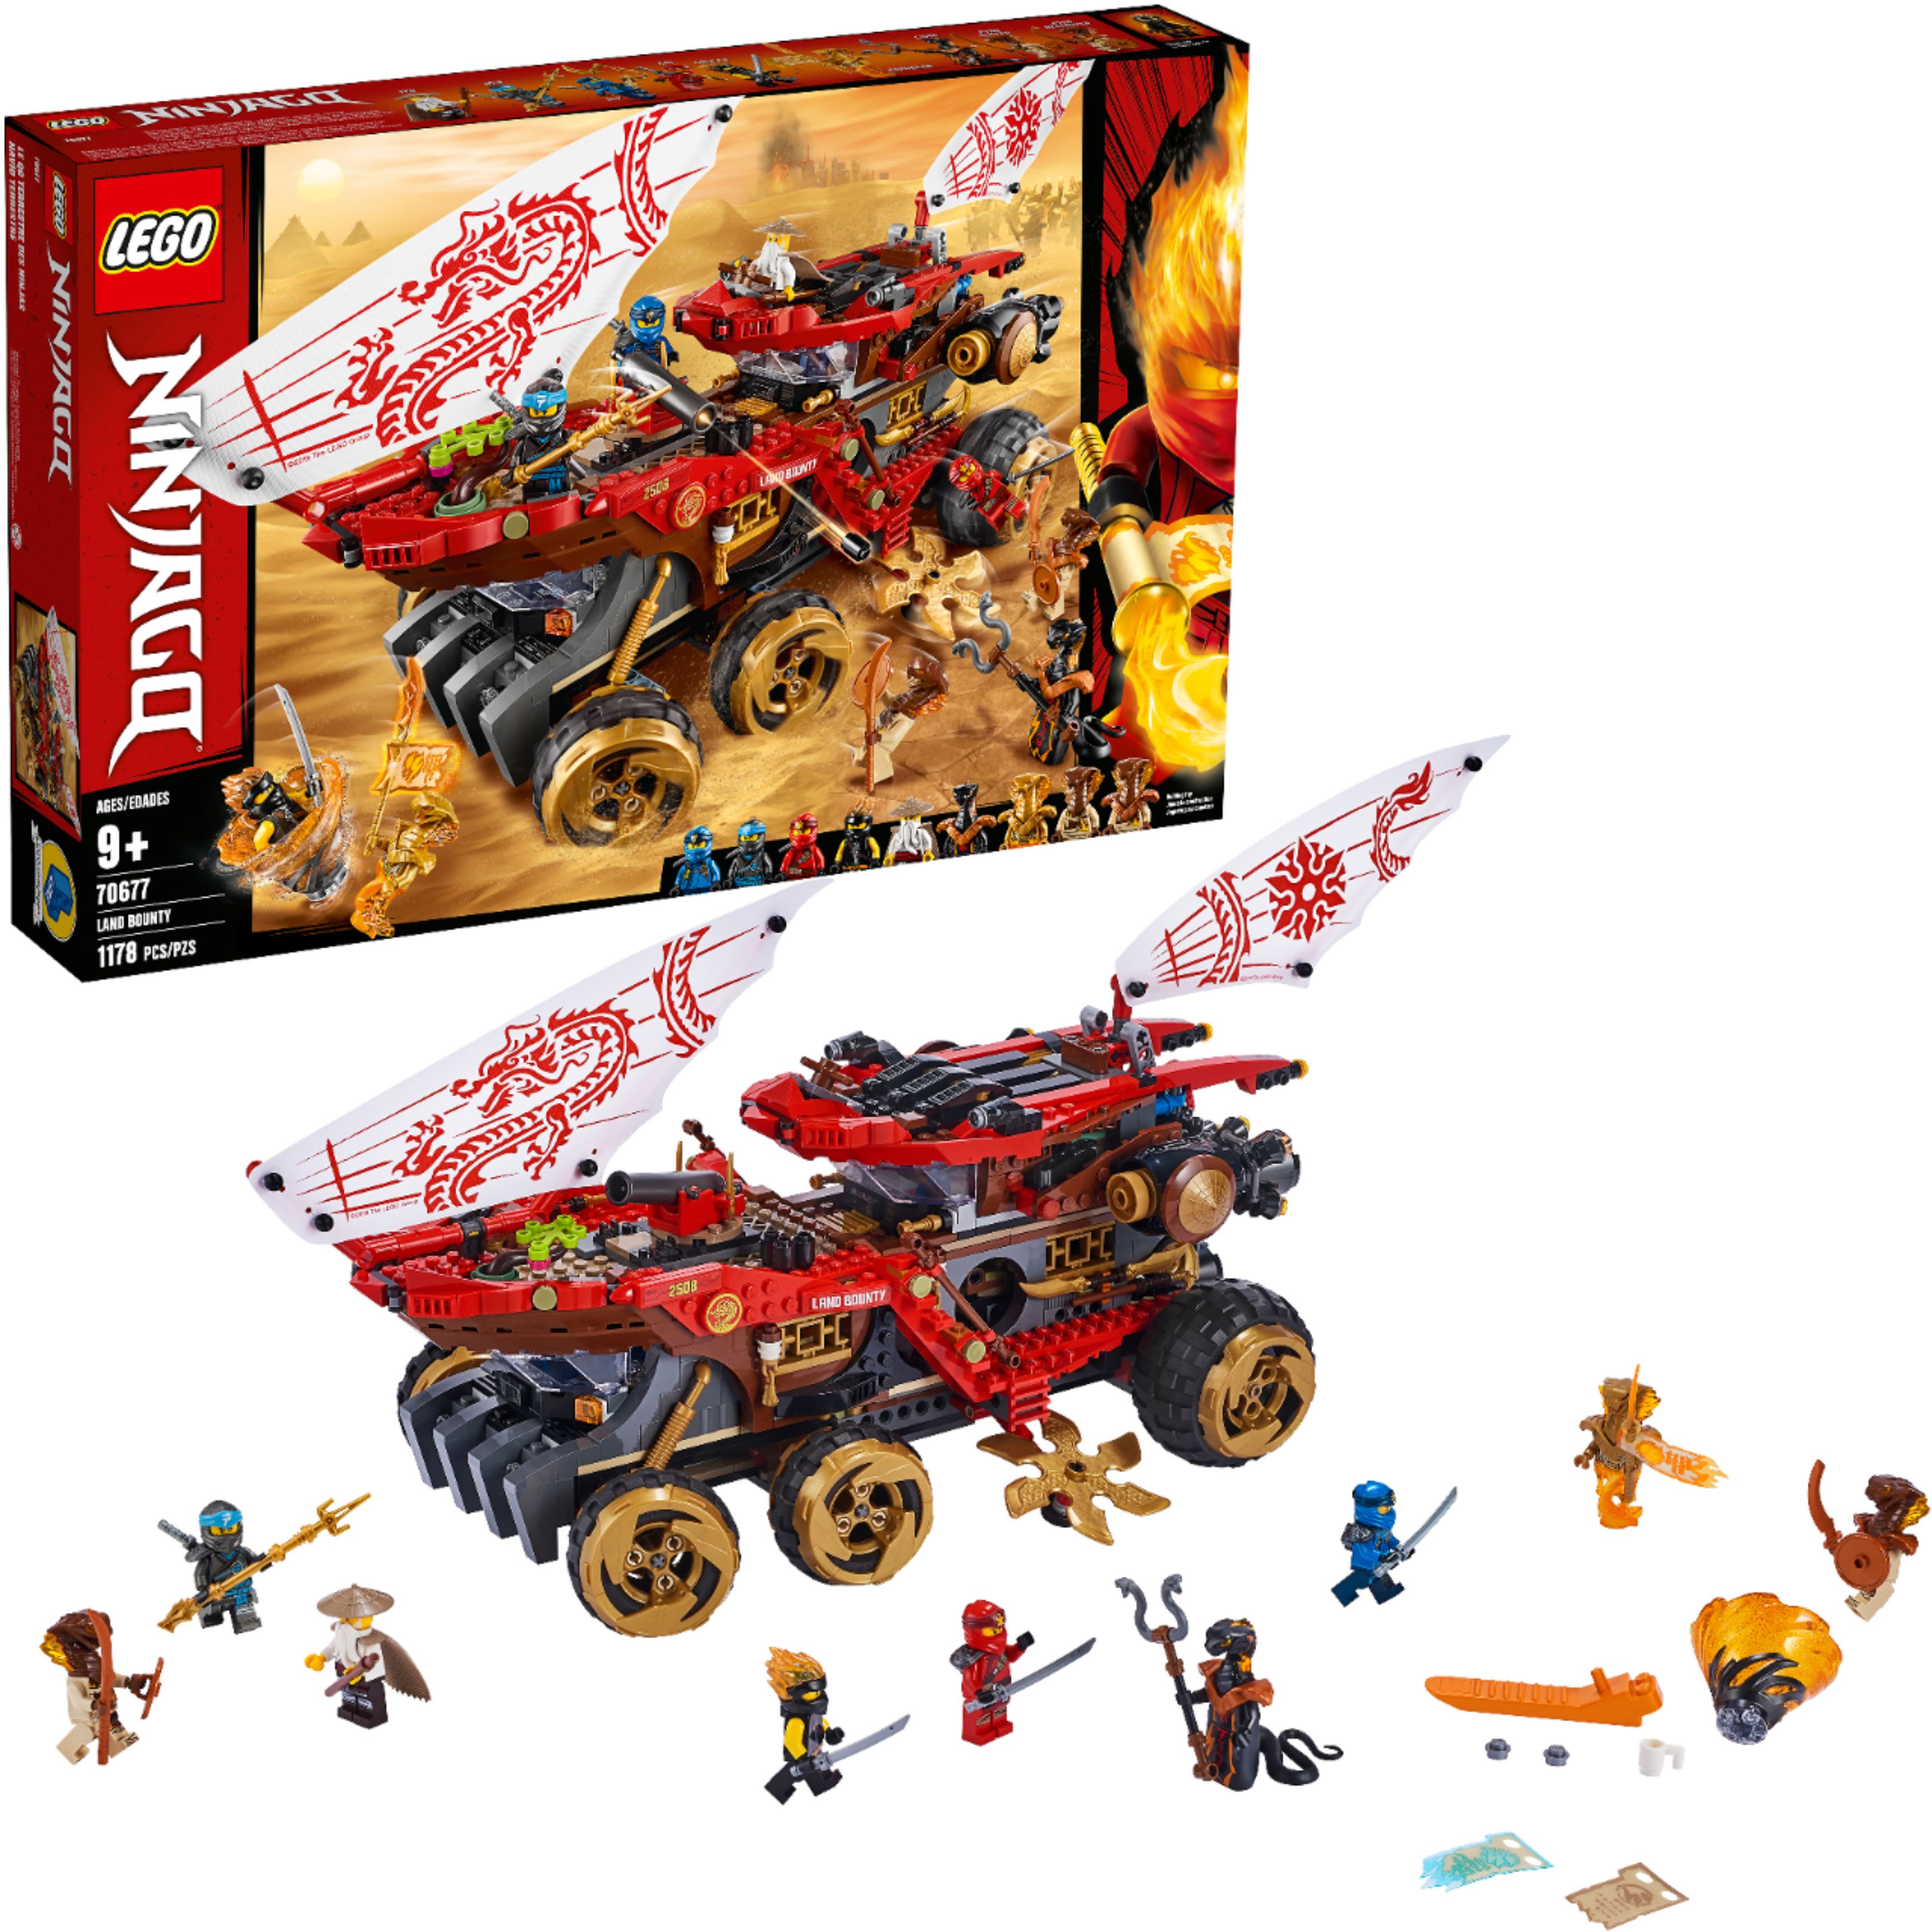 LEGO Ninjago Land 70677 - Best Buy